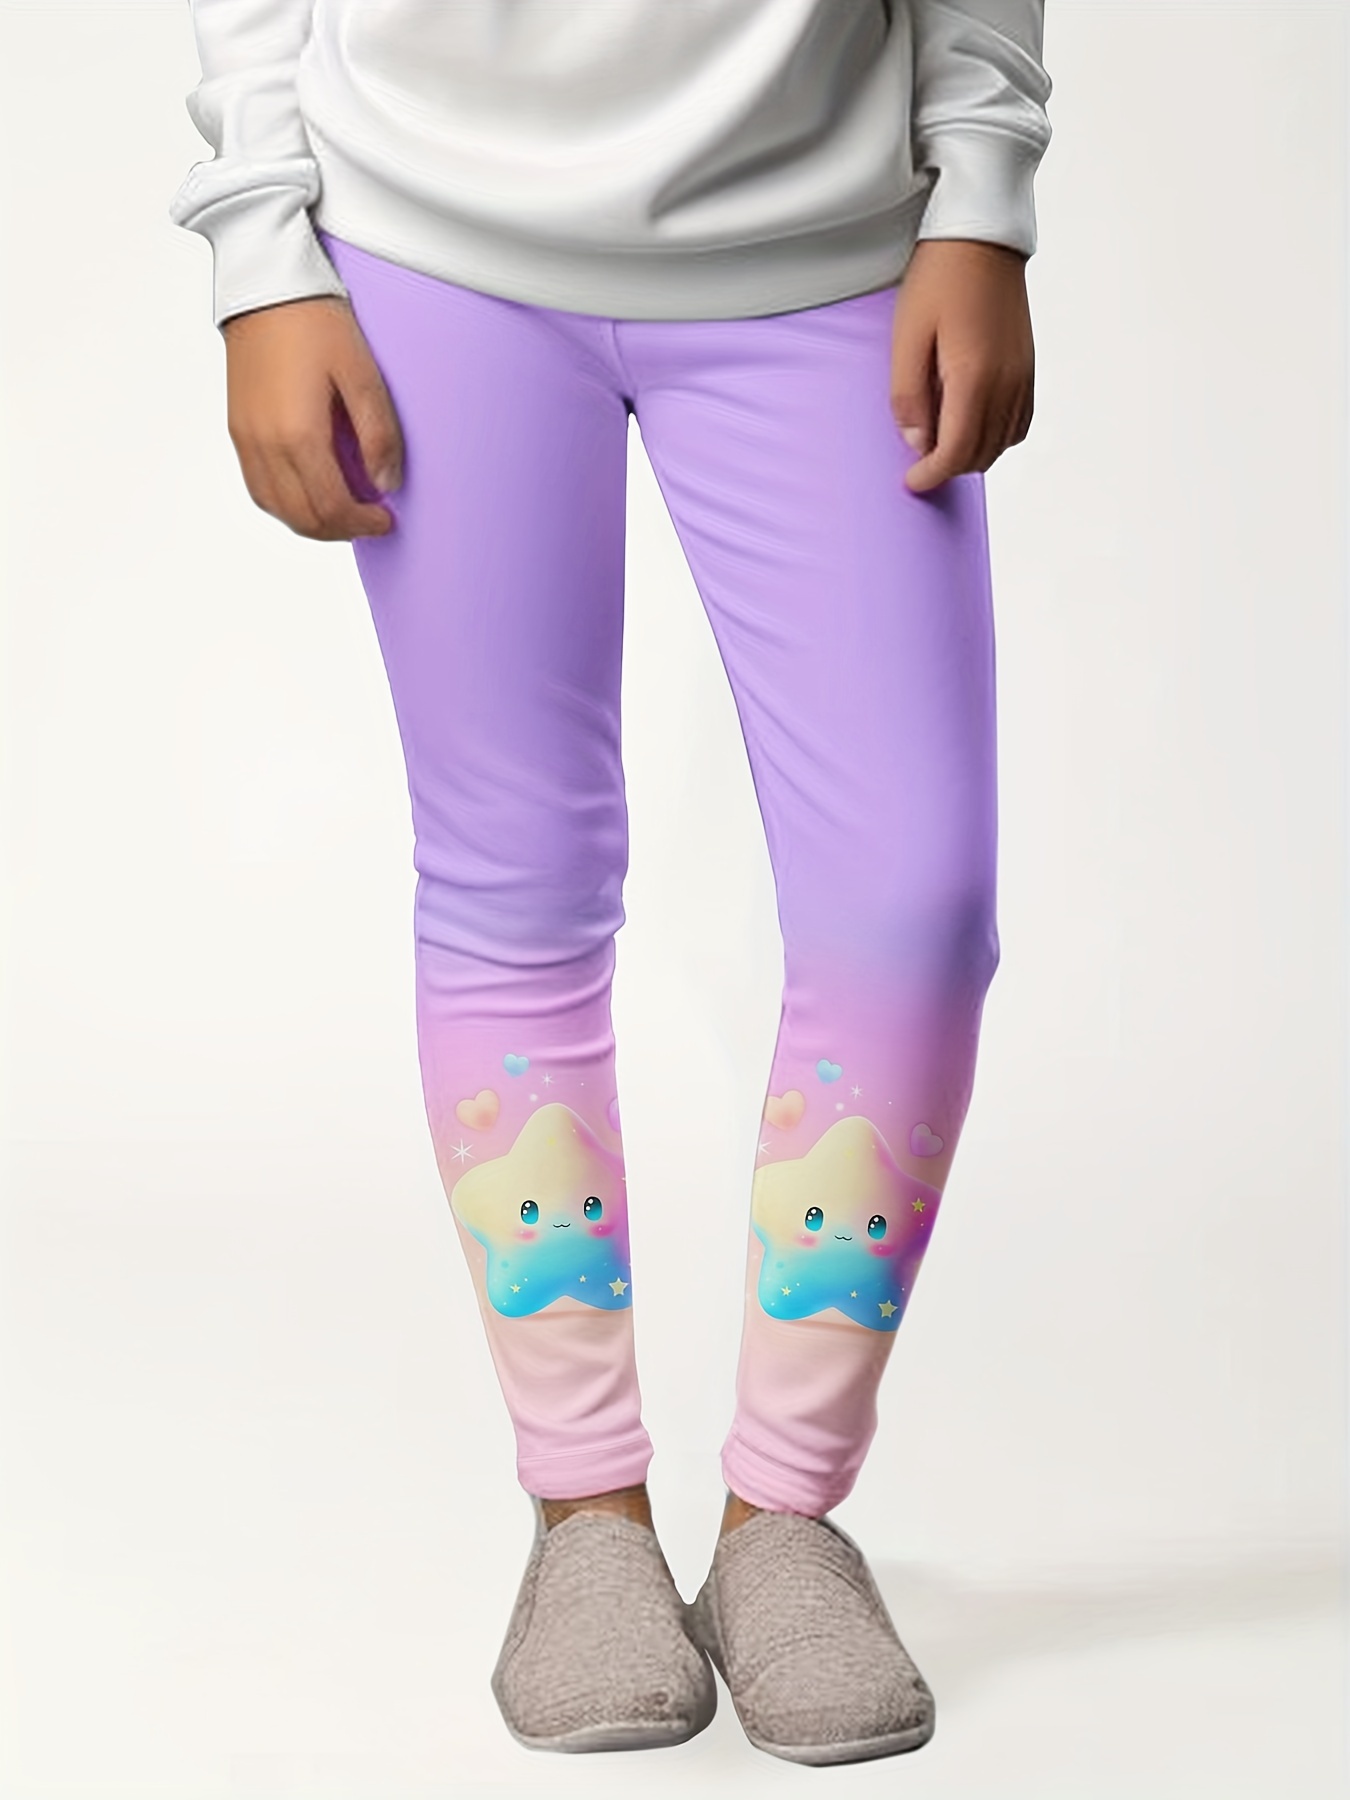 Pastel Tie Dye Capri Leggings Women, Watercolor Cropped Yoga Pants Printed  Graphic Workout Gym Fun Designer Tights Gift